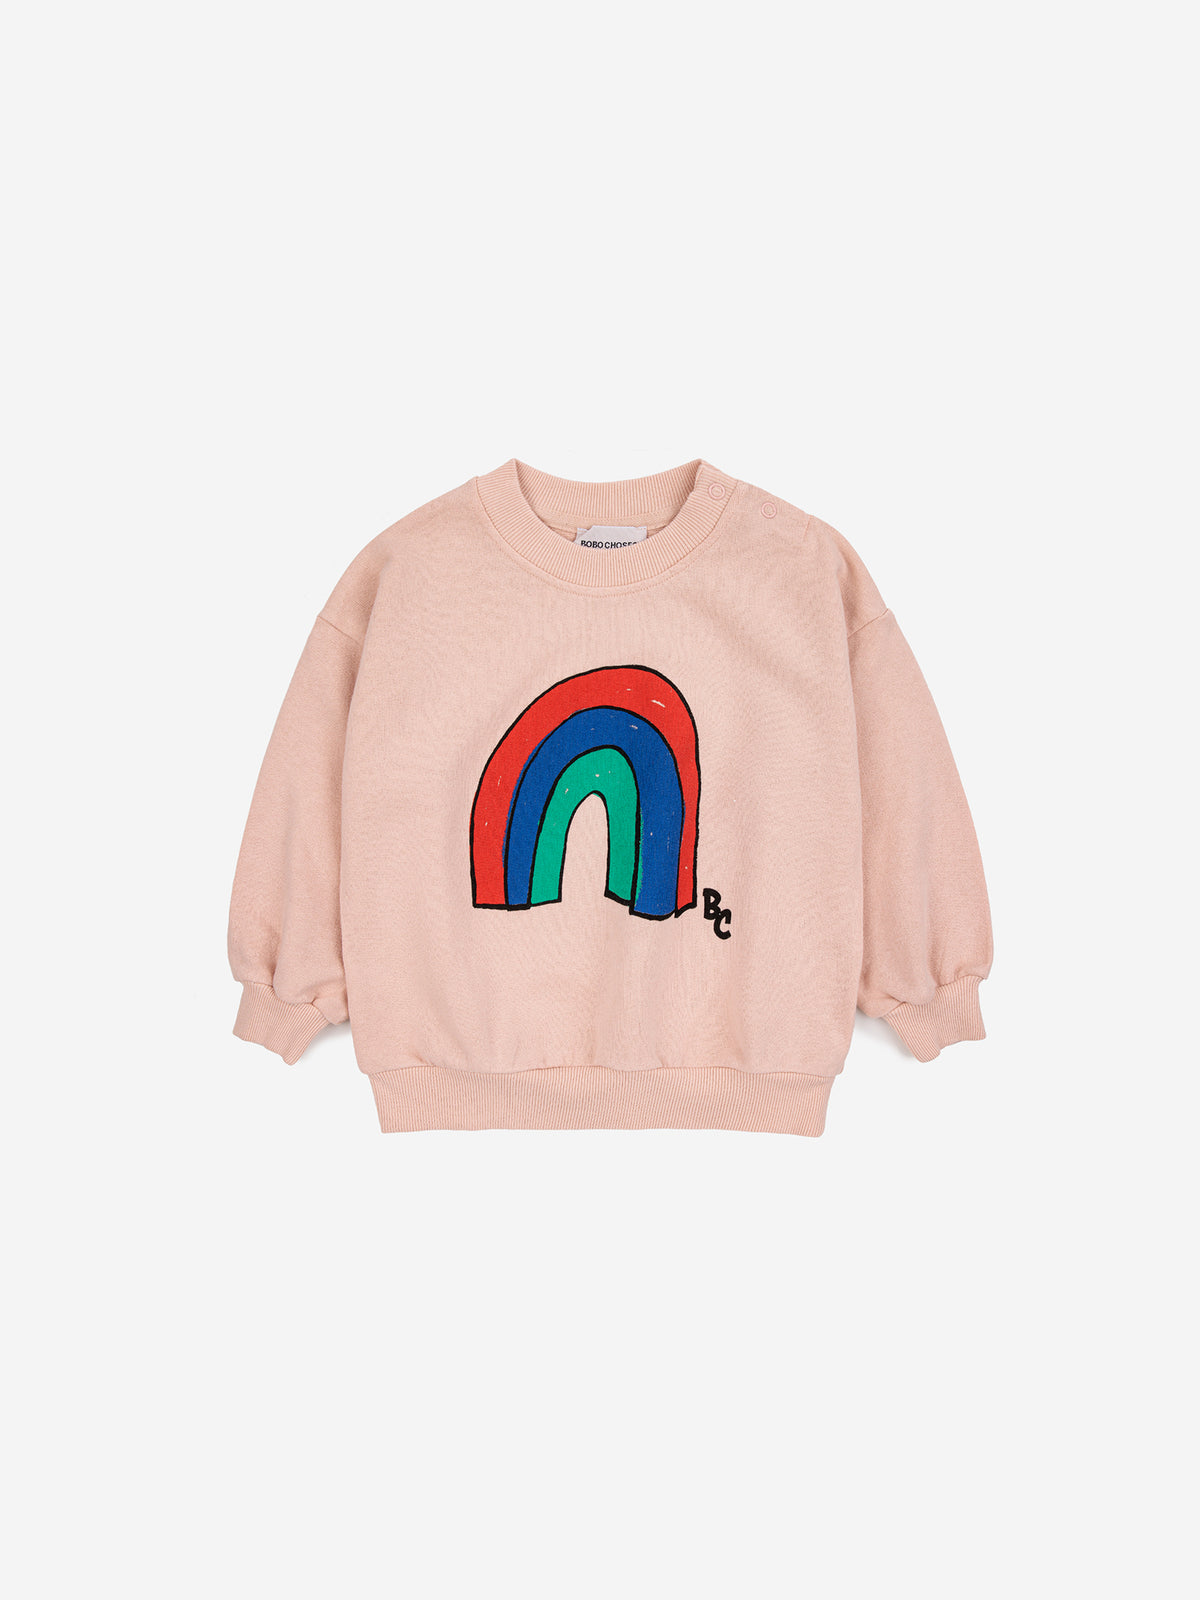 Rainbow sweatshirt baby, Bobo Choses